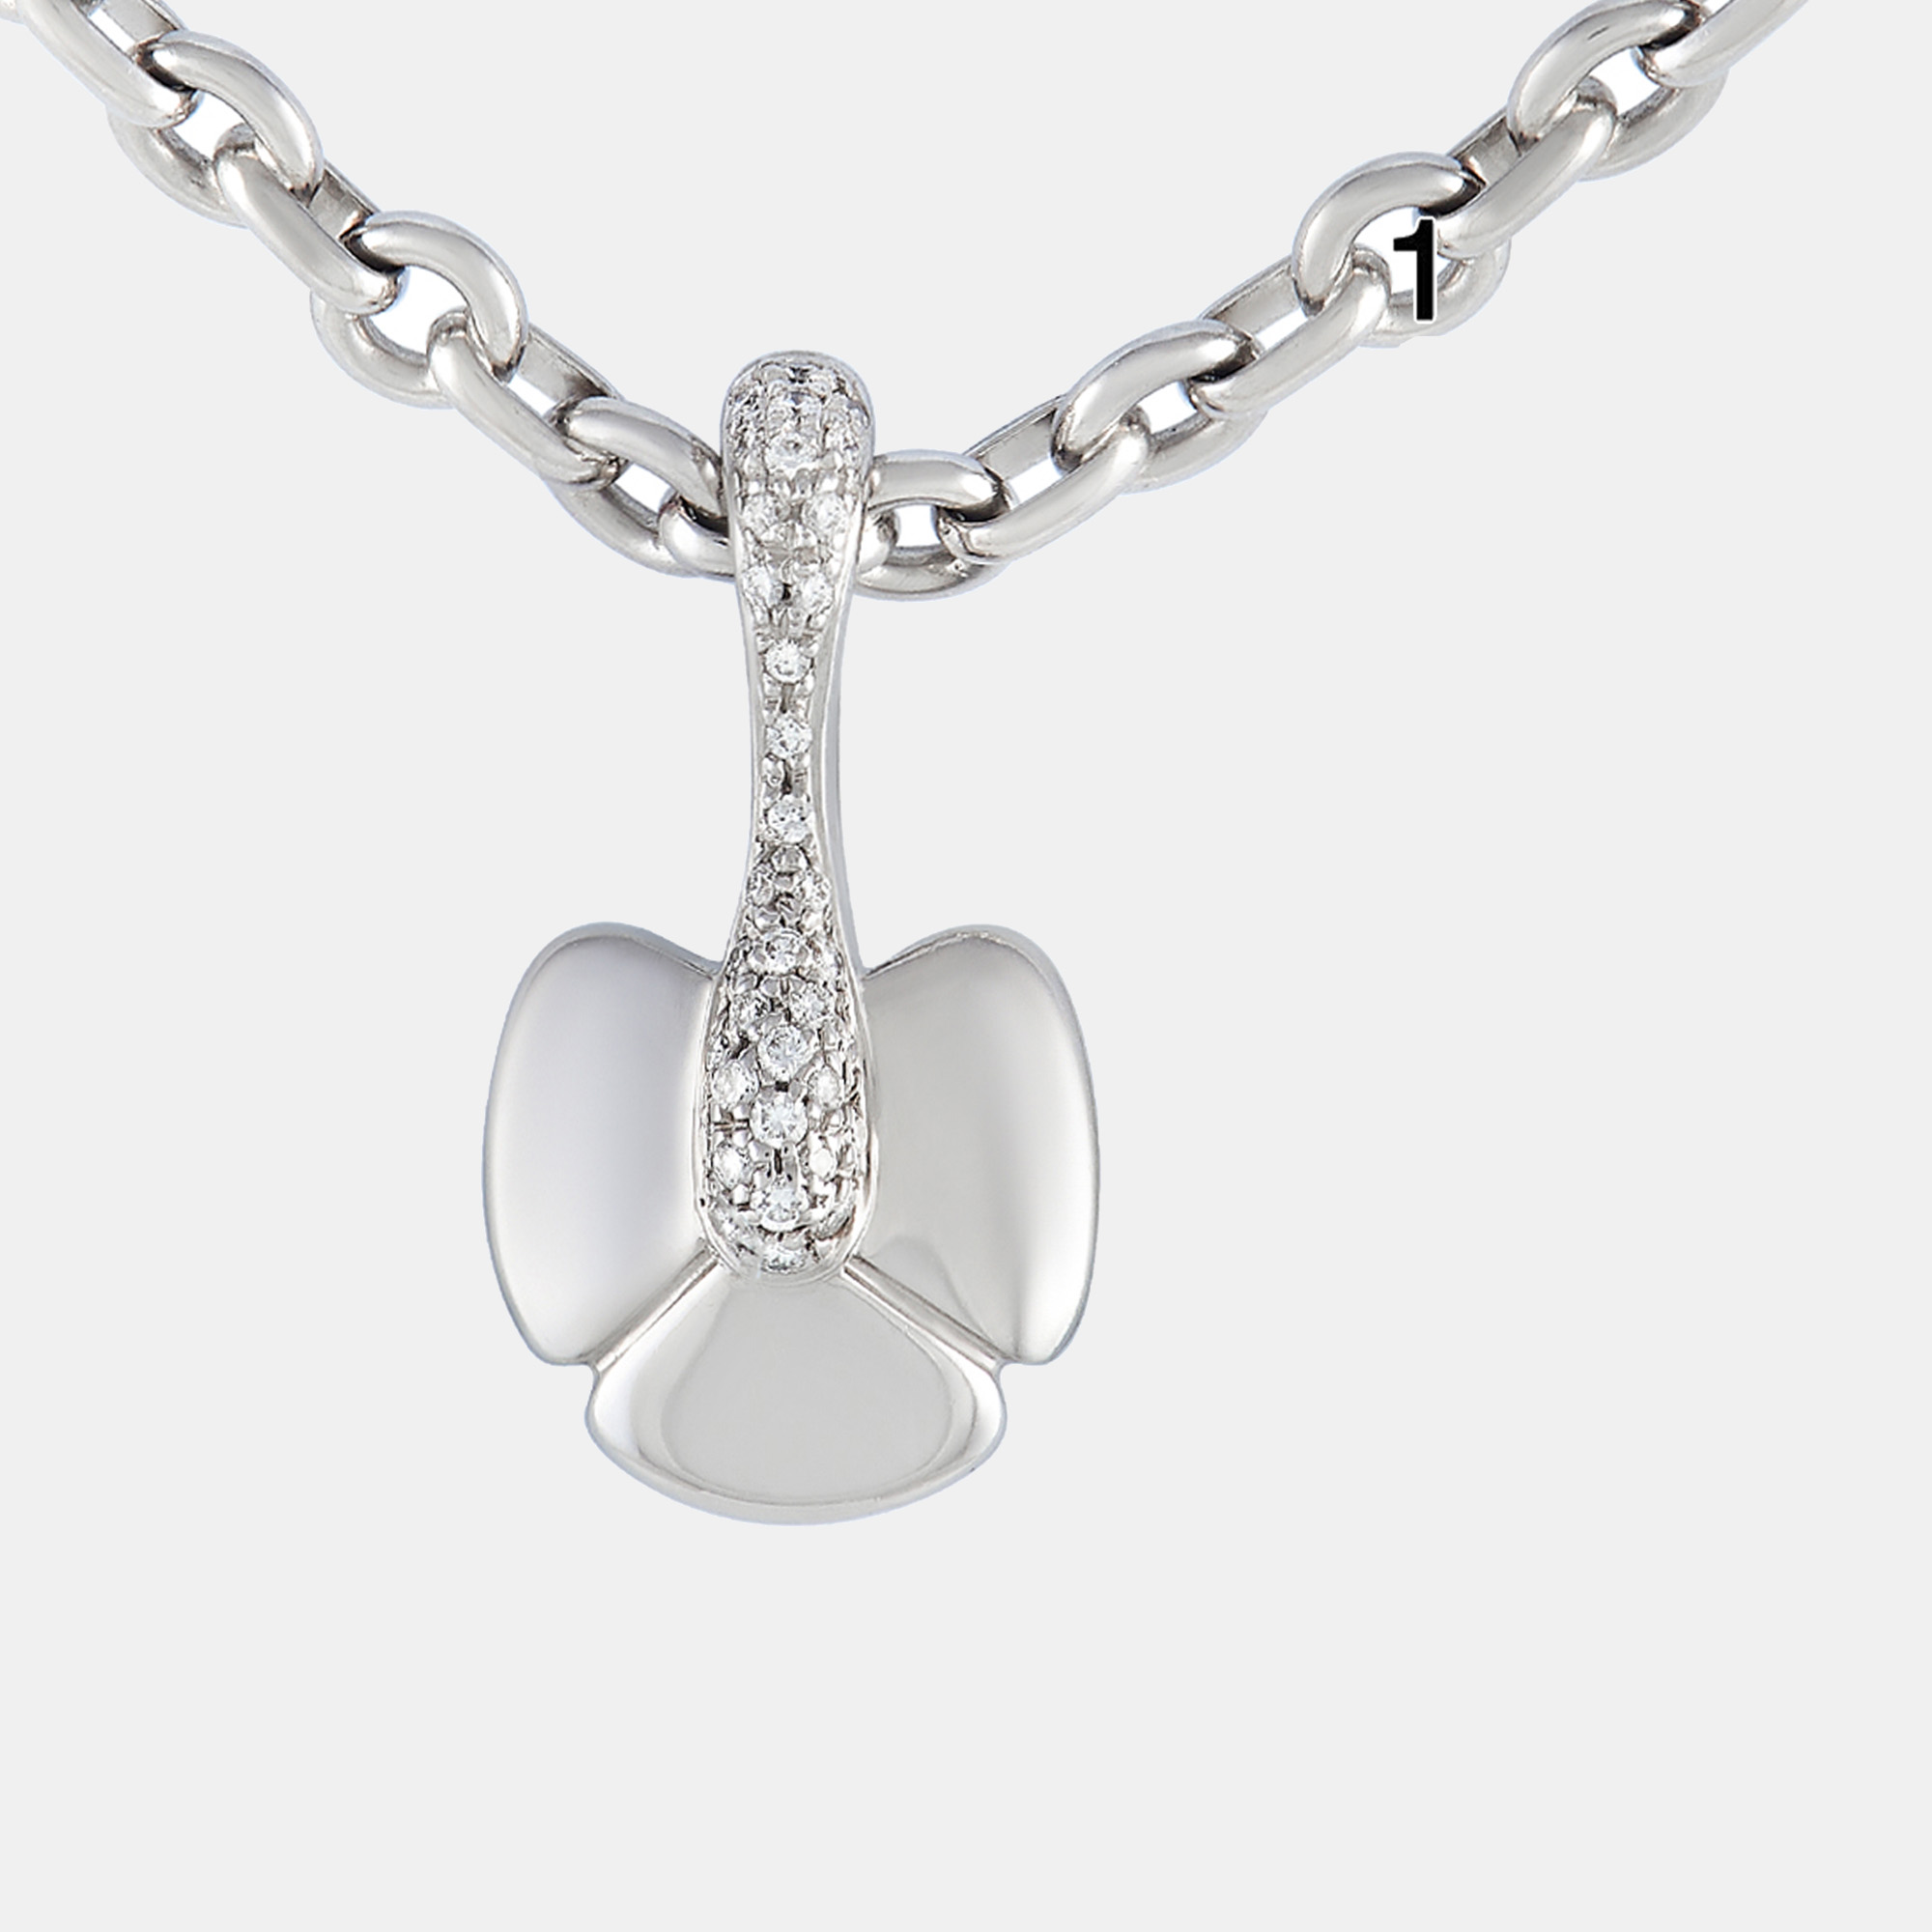 Chaumet 18k white gold diamond pendant necklace